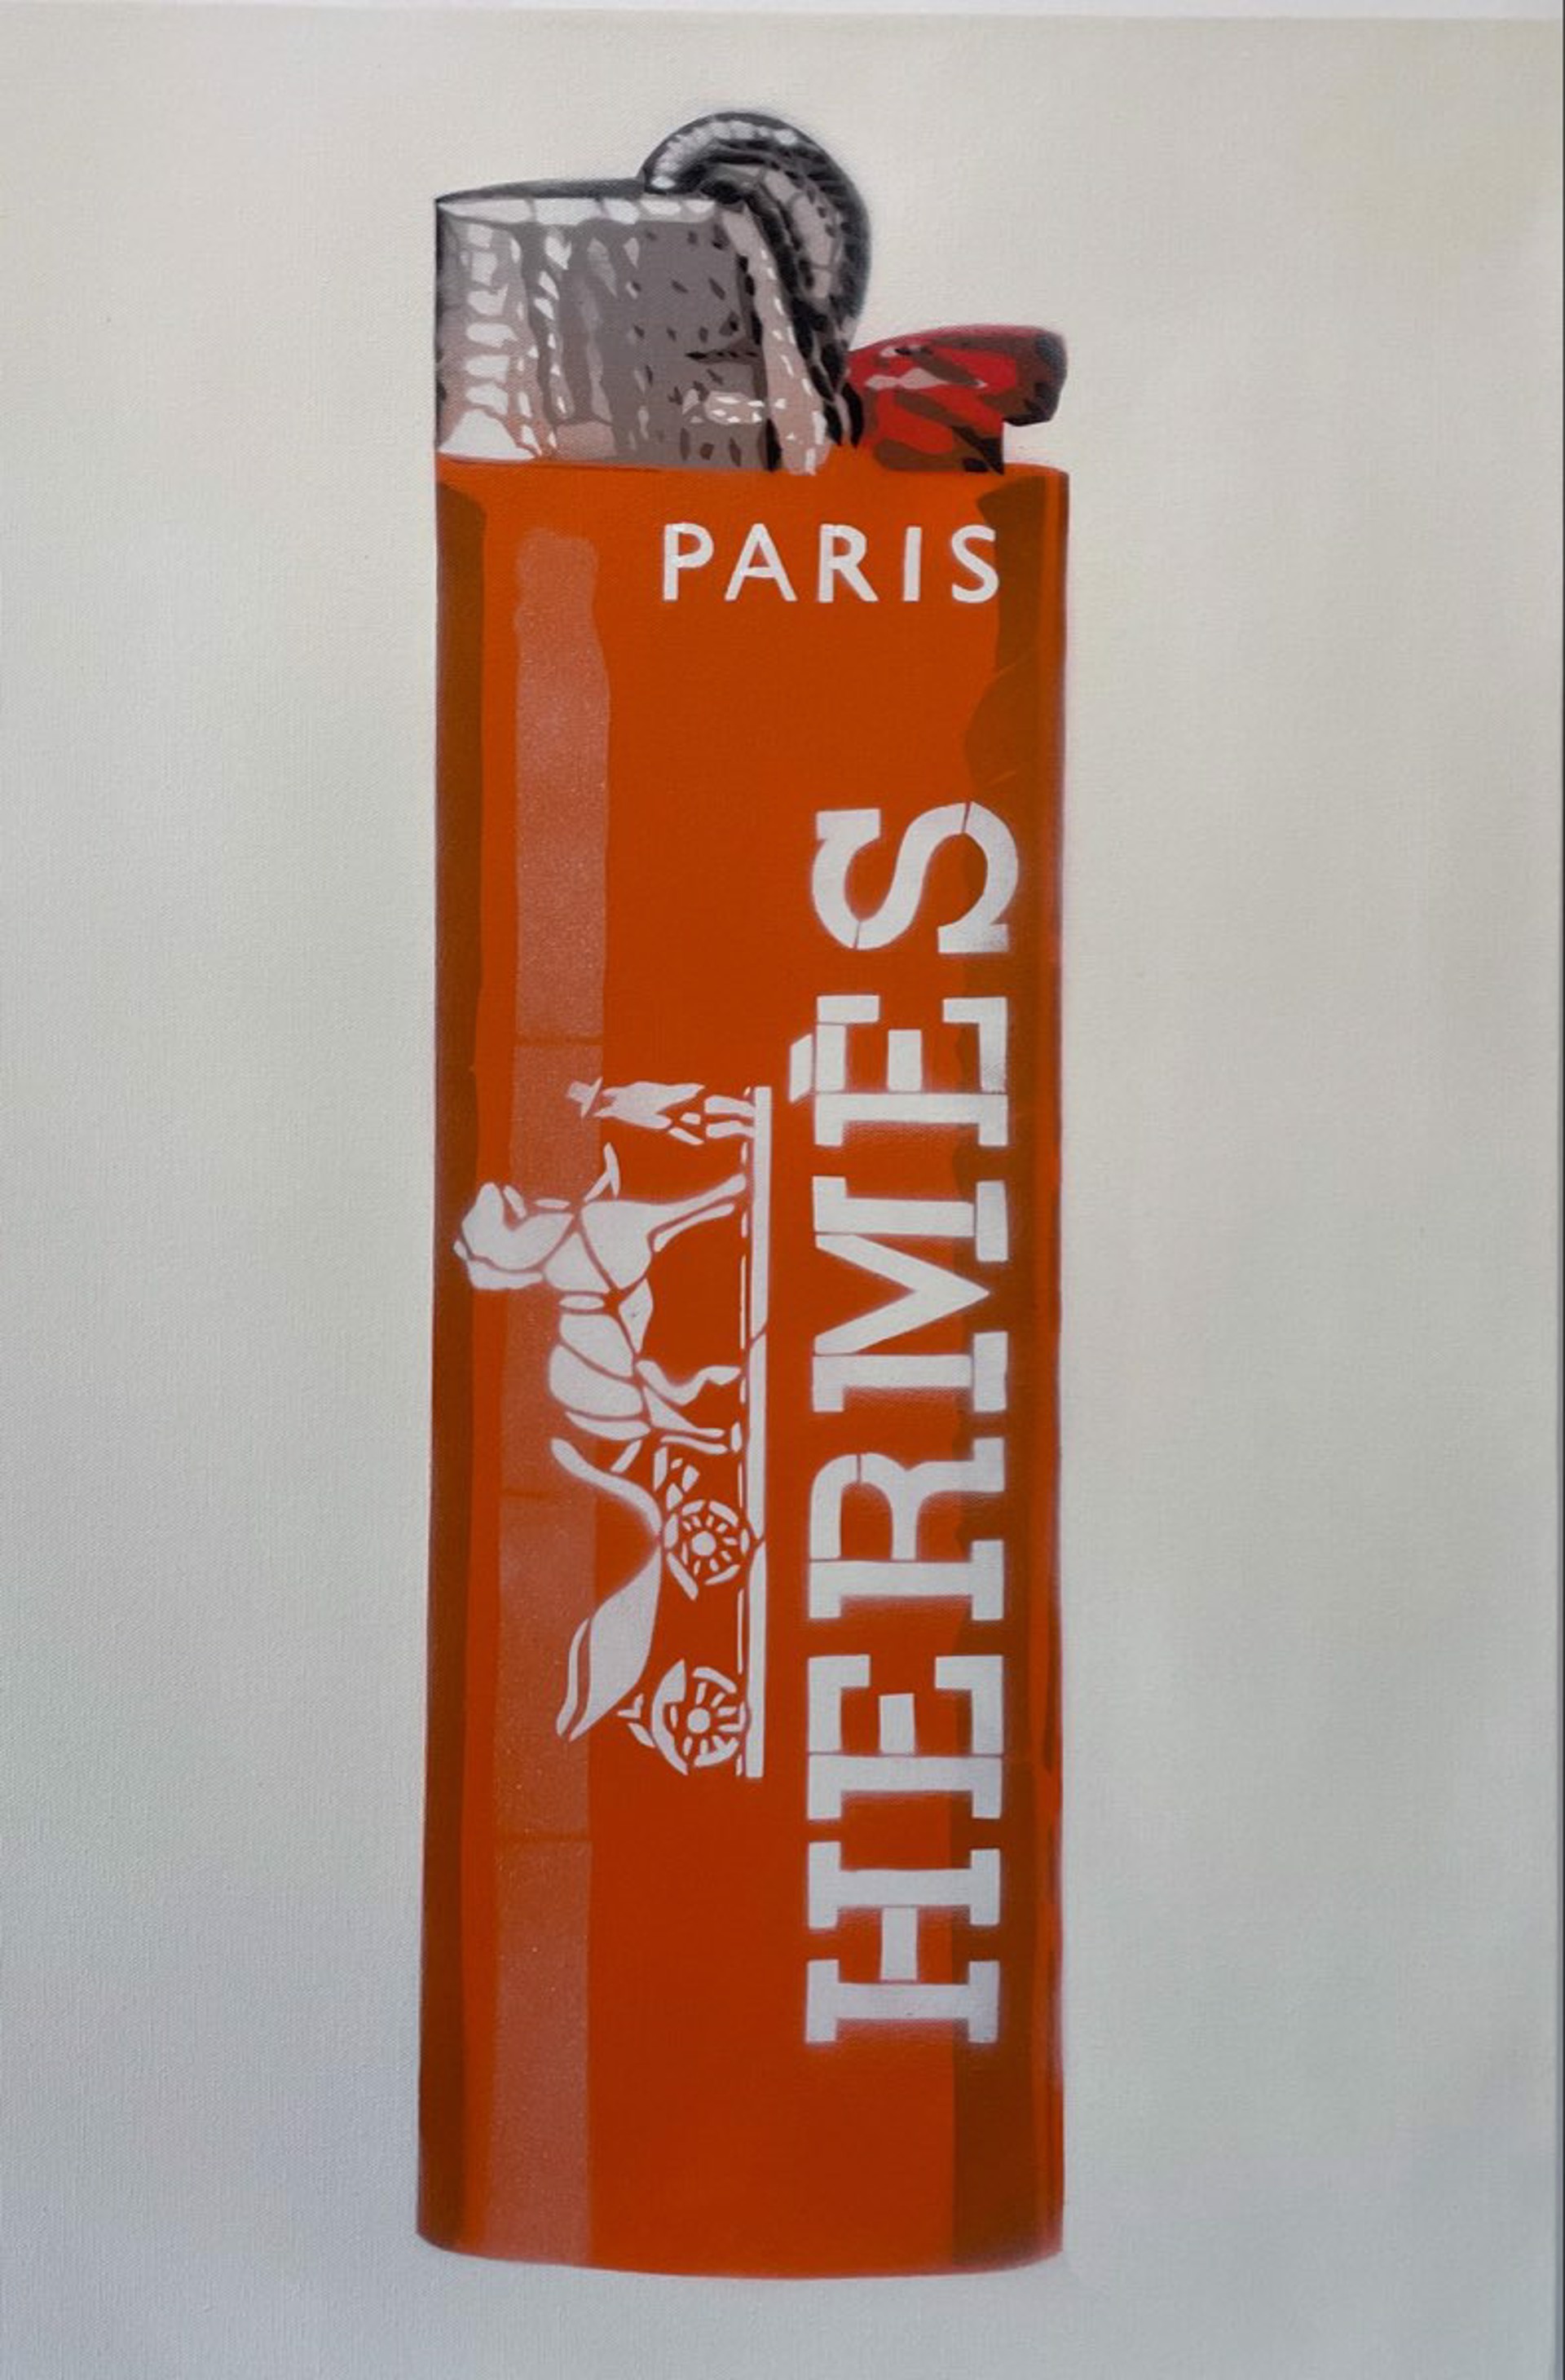 Hermès Lighter by David Lowell